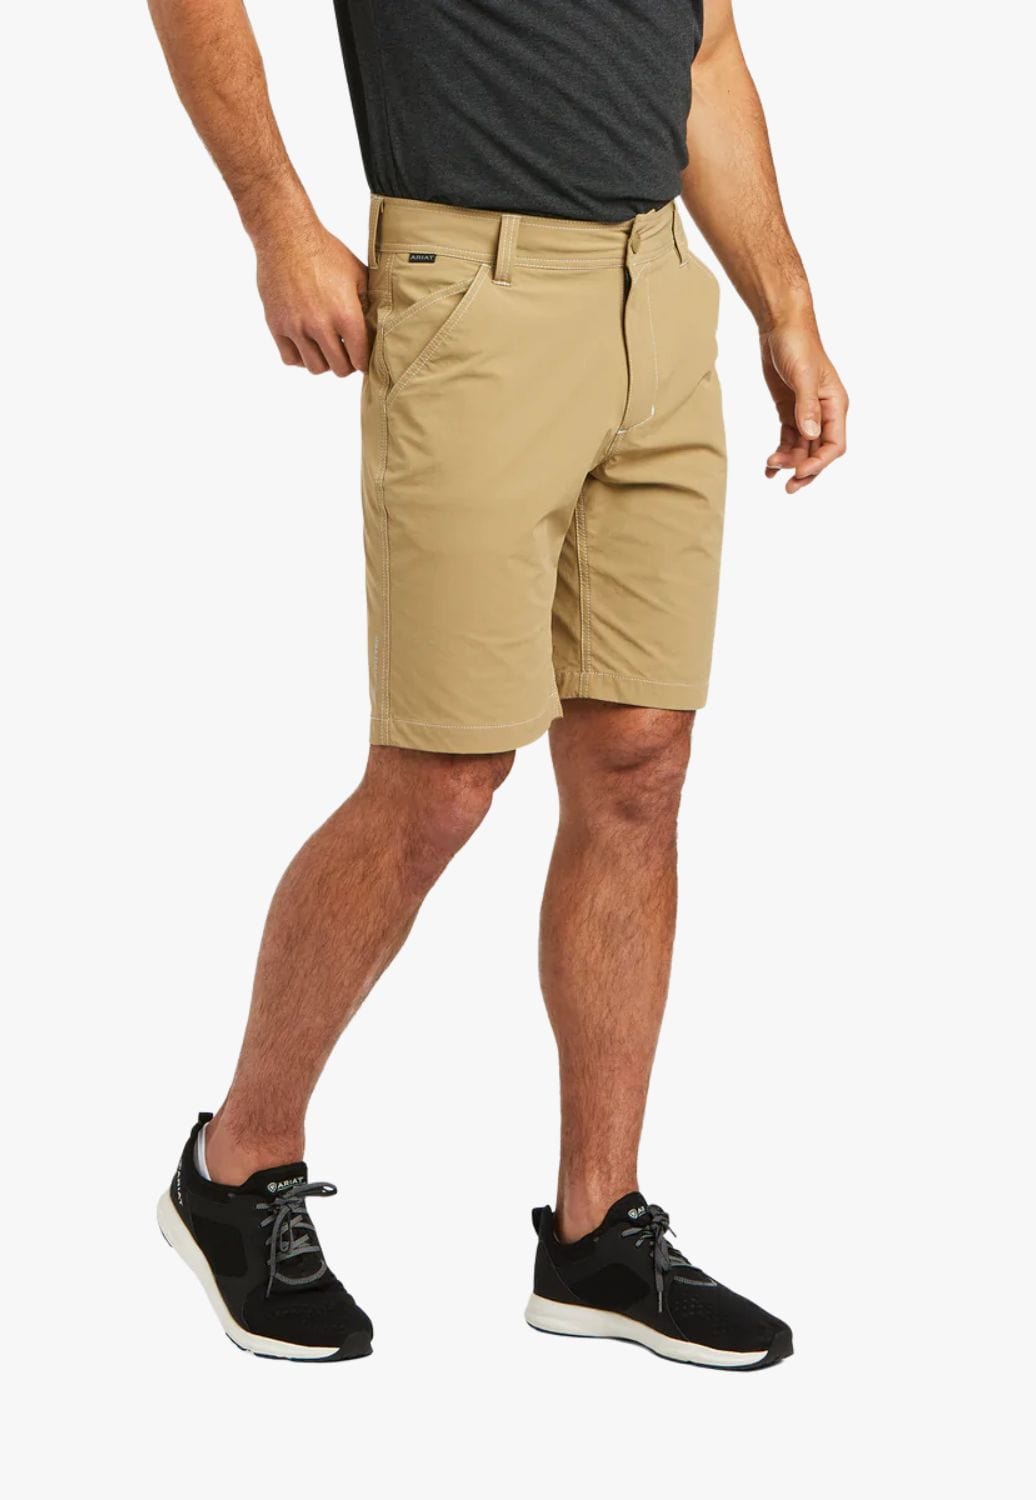 Ariat CLOTHING-Mens Shorts Ariat Mens Tek Short